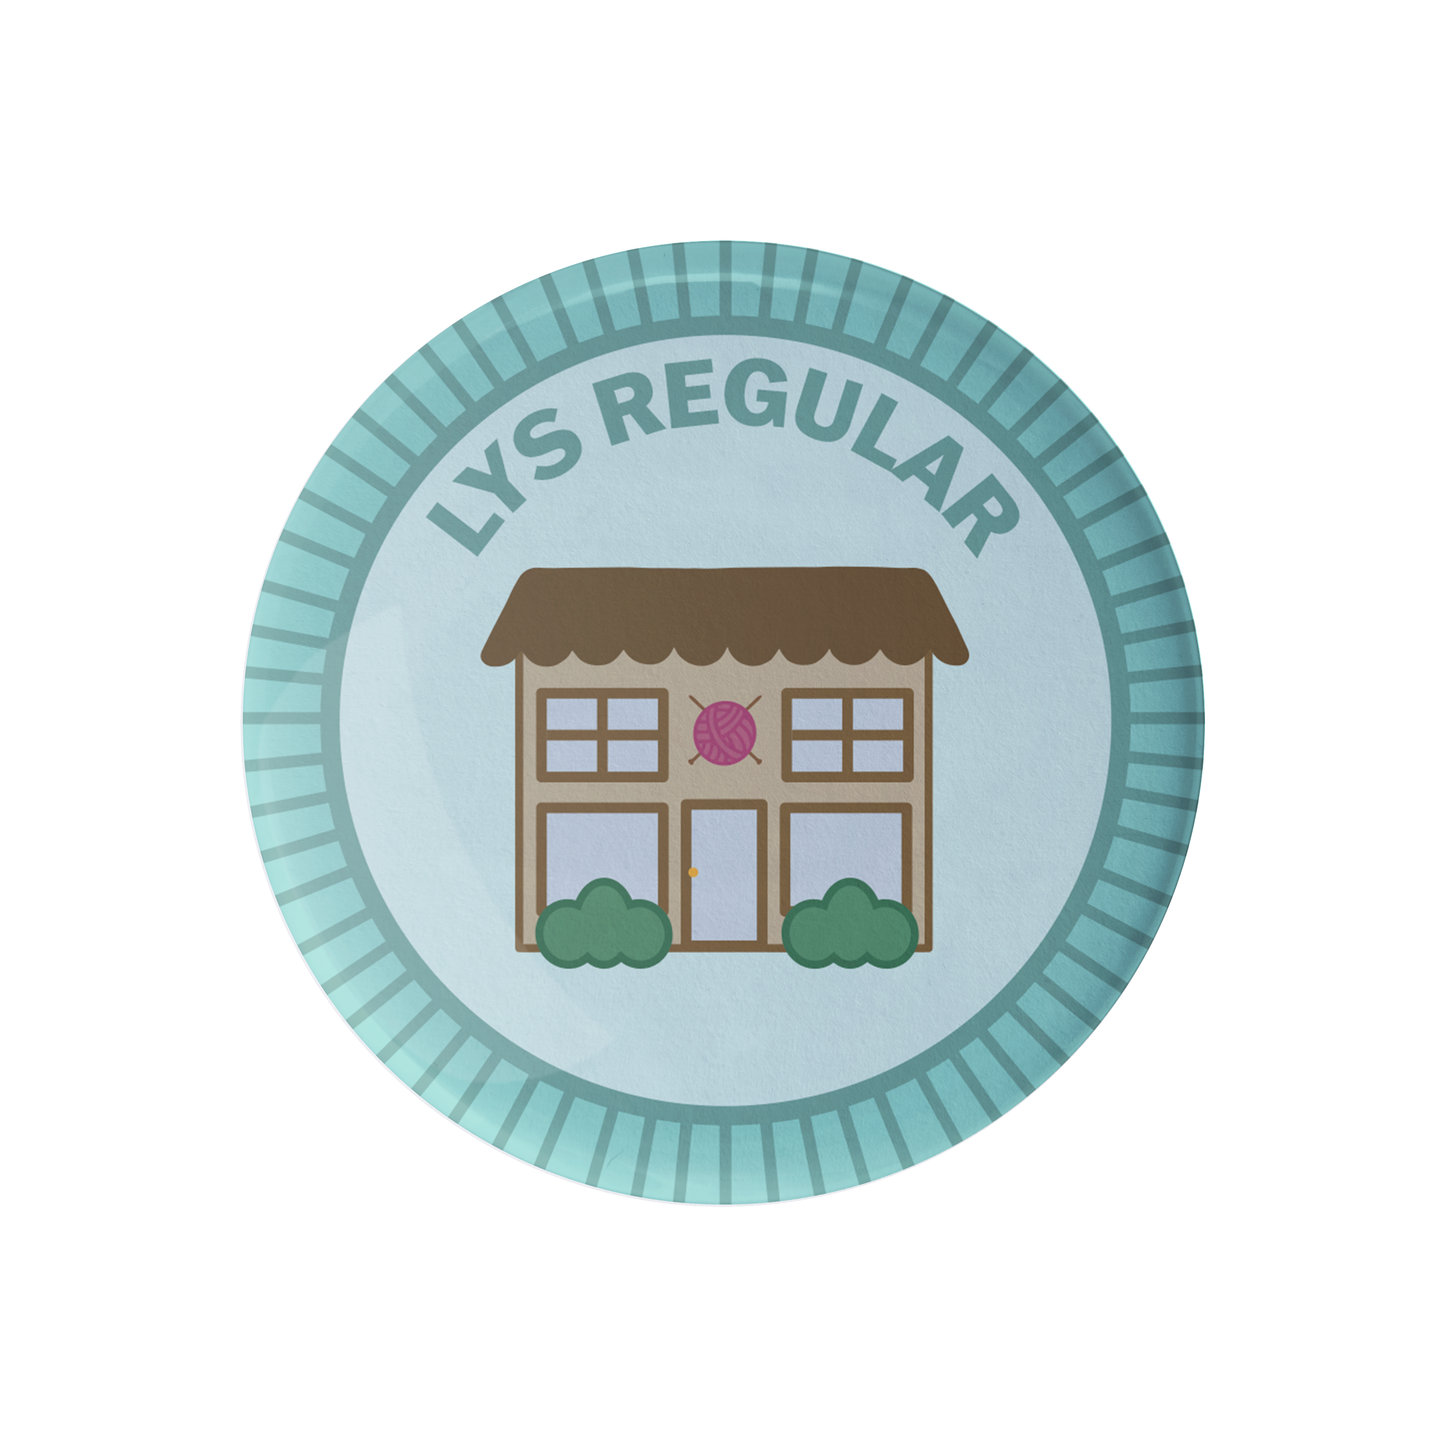 LYS Regular Knitting Merit Badge